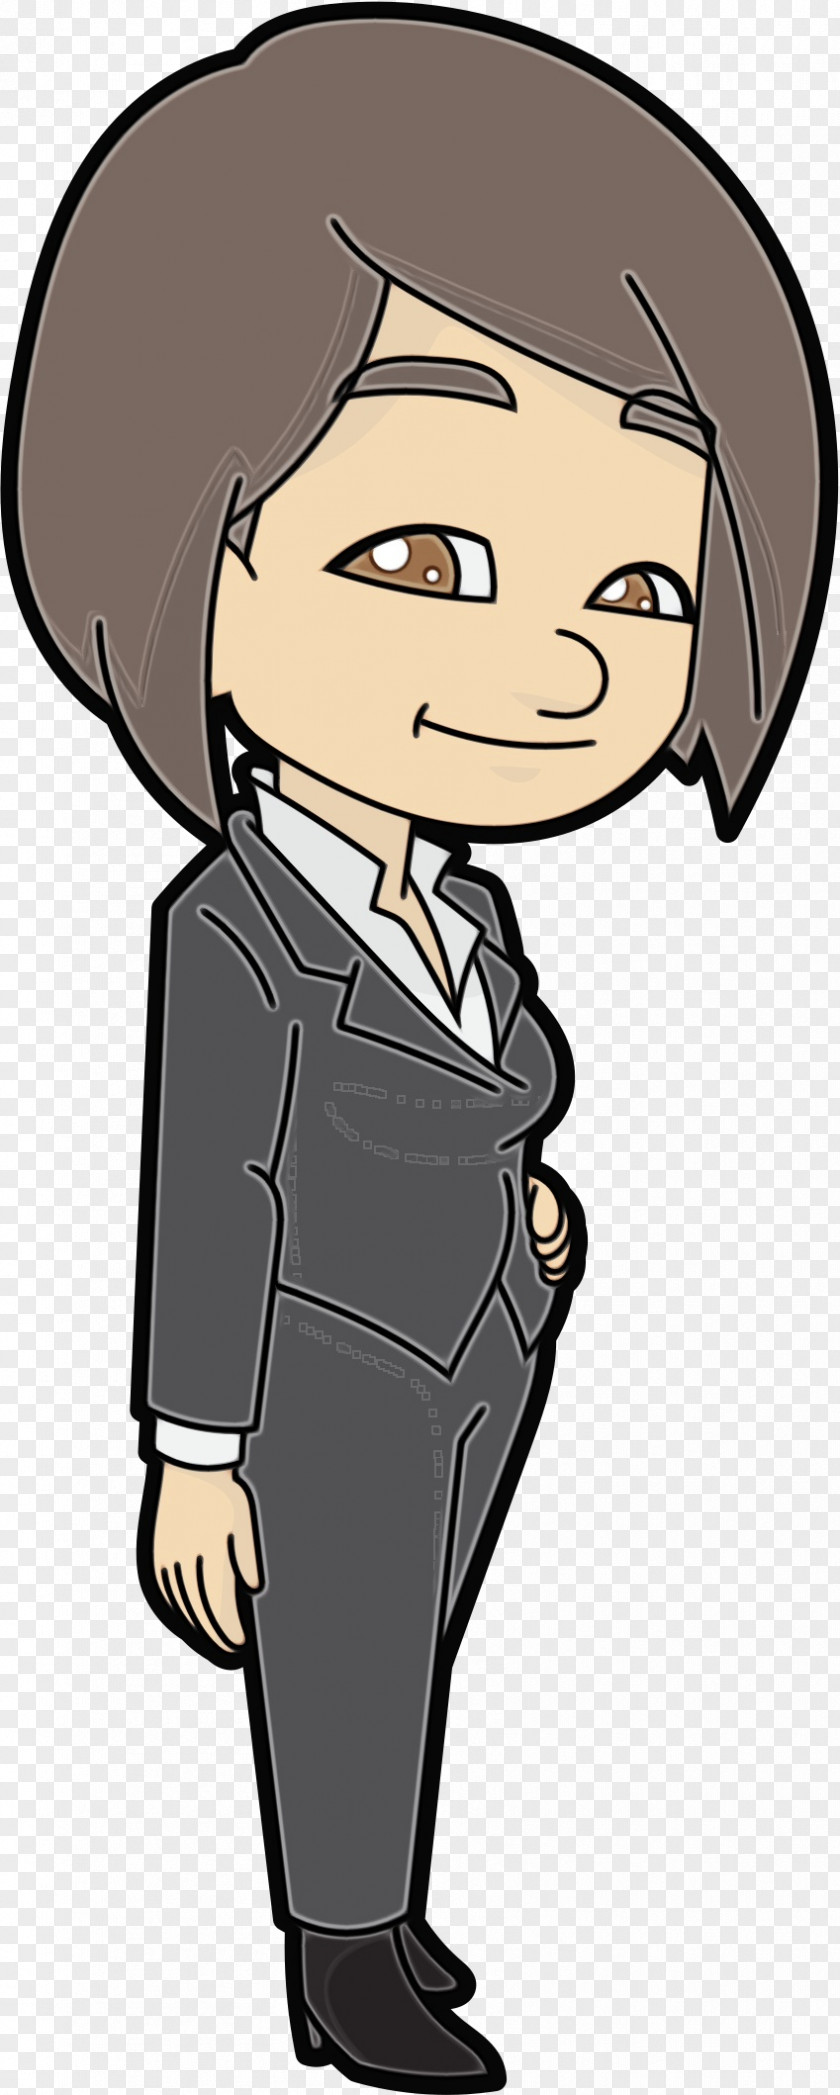 Tuxedo Gesture Character Cartoon Human Boy Smile PNG